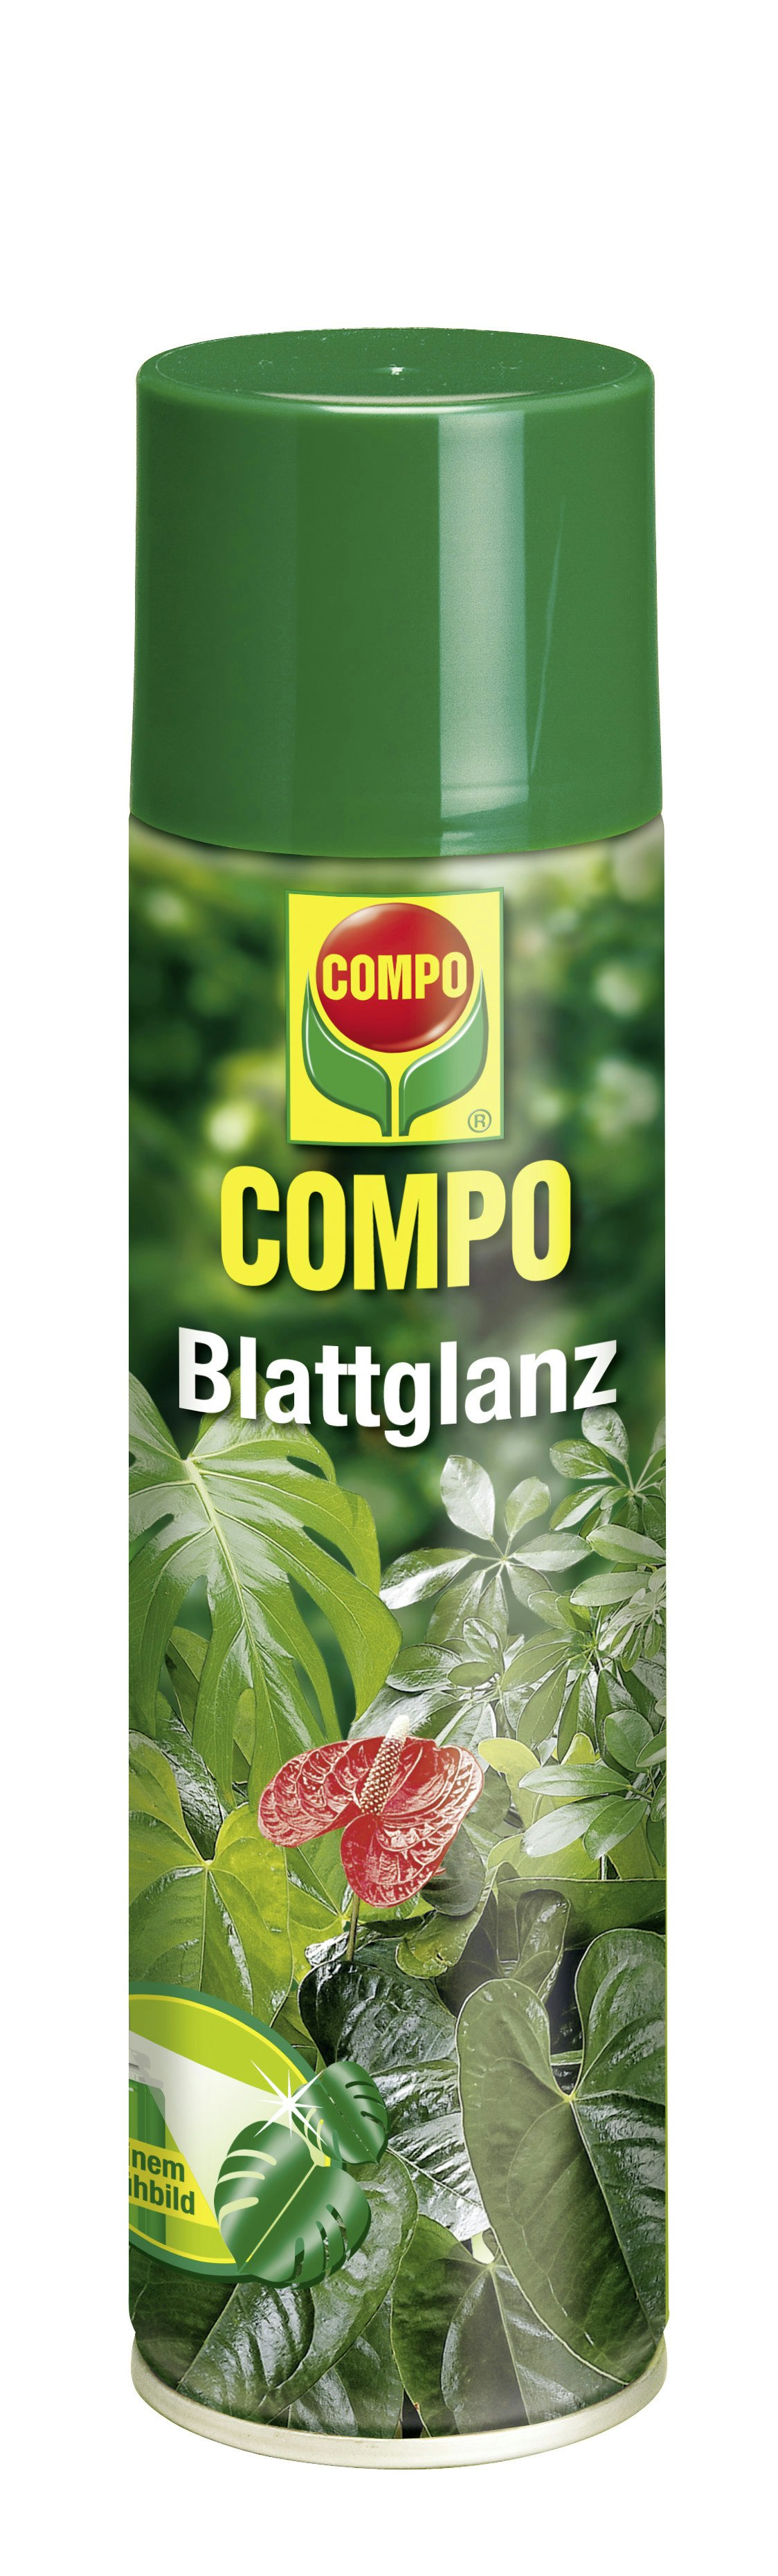 COMPO Blattglanz 300 ml